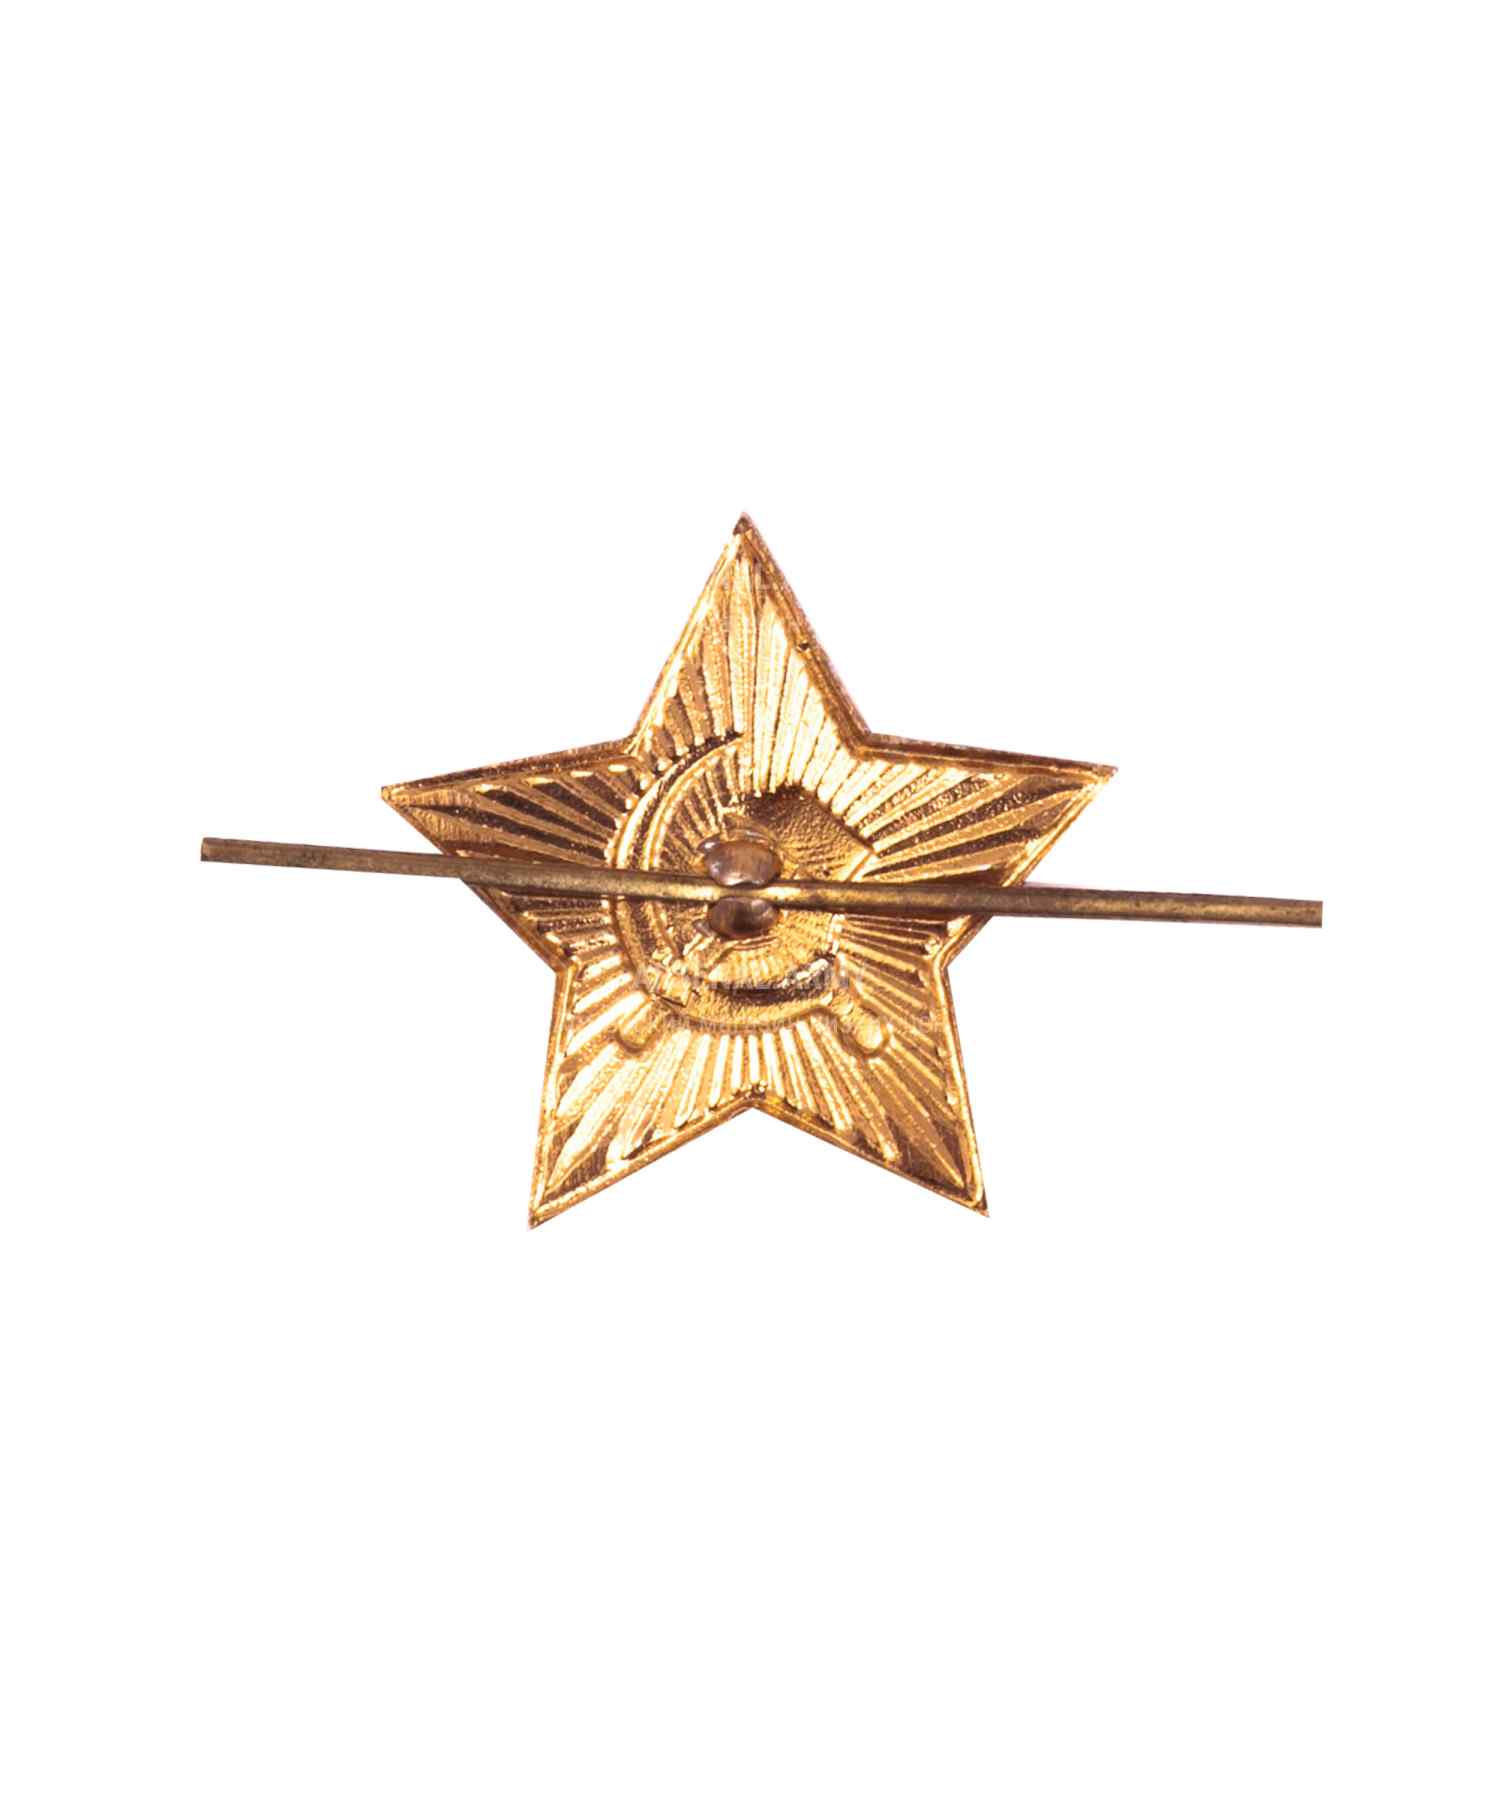 Кокарда звезда советской армии 30 мм.